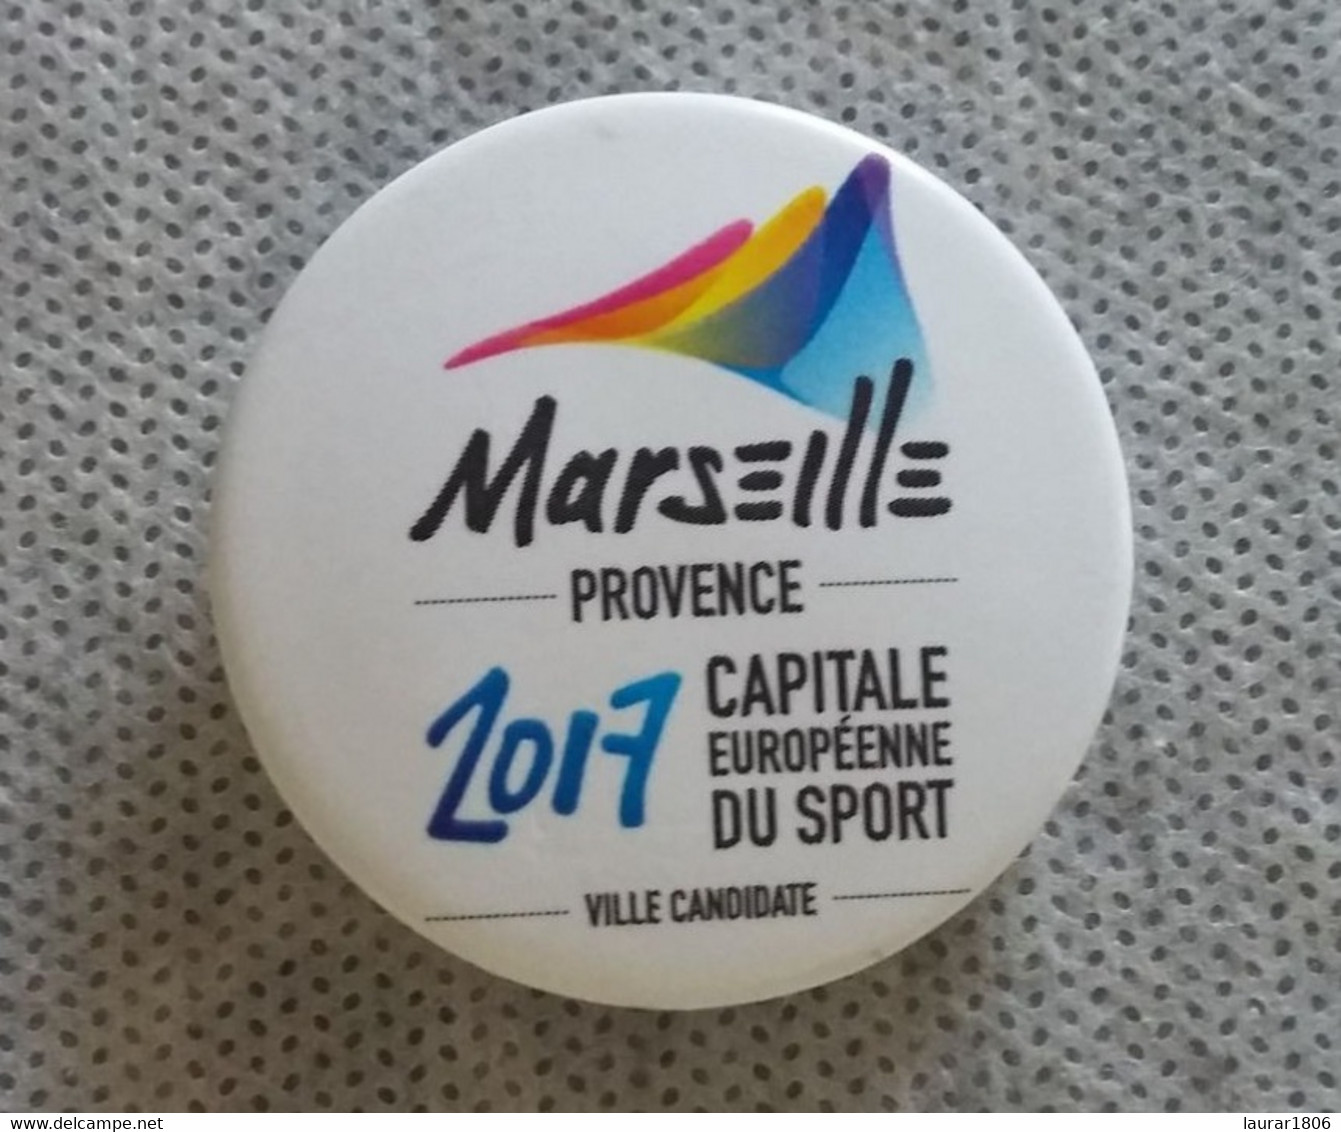 BADGE - MARSEILLE 2017 - CAPITALE EUROPEENNE DU SPORT - Diam. 37mm - NEUF - Tir à L'Arc